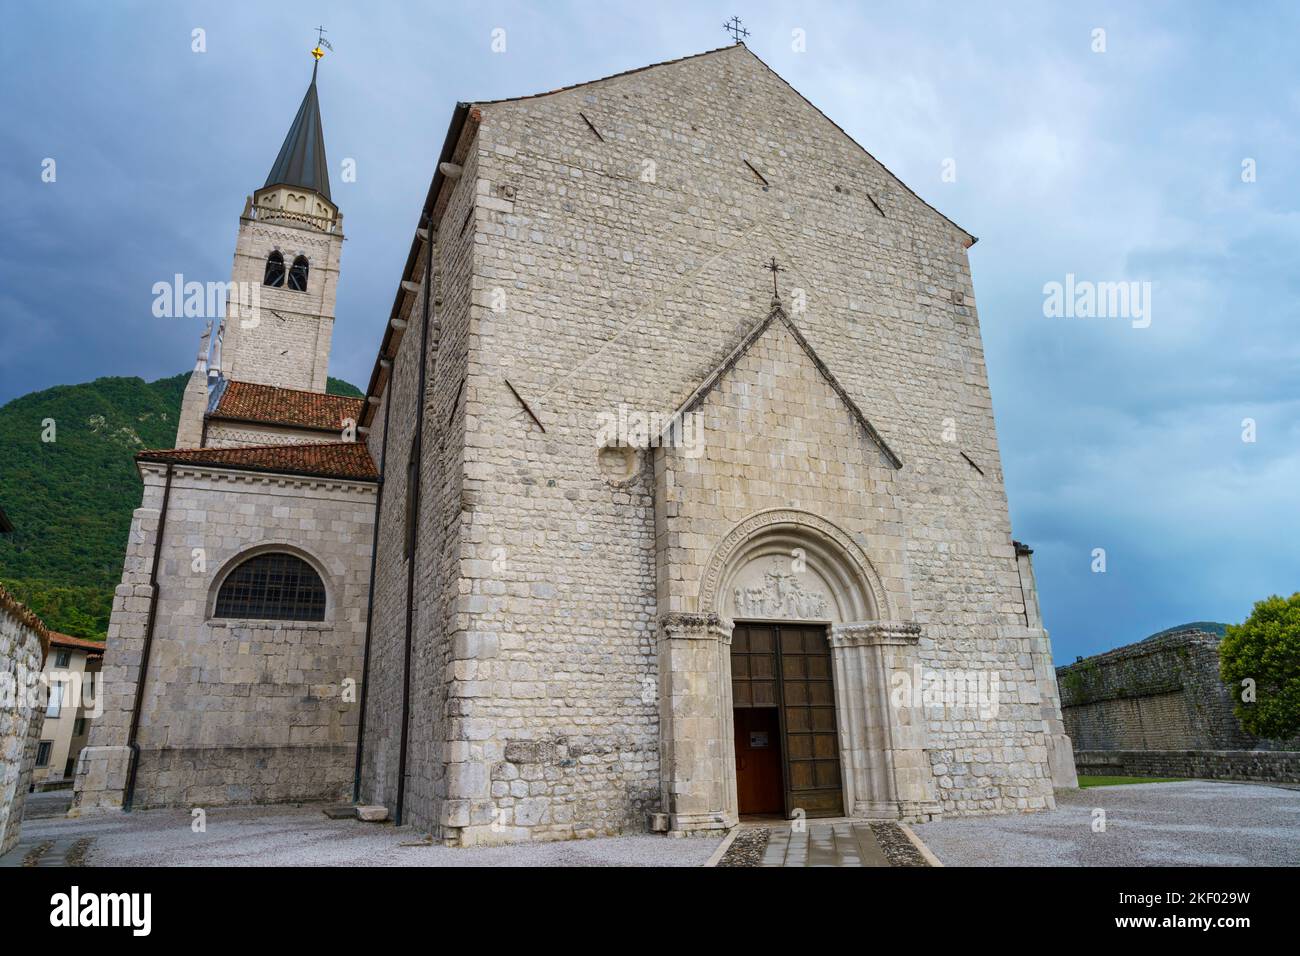 Exterior of historic buildings in Venzone, Udine province, Friuli-Venezia Giulia, Italy. Duomo Stock Photo